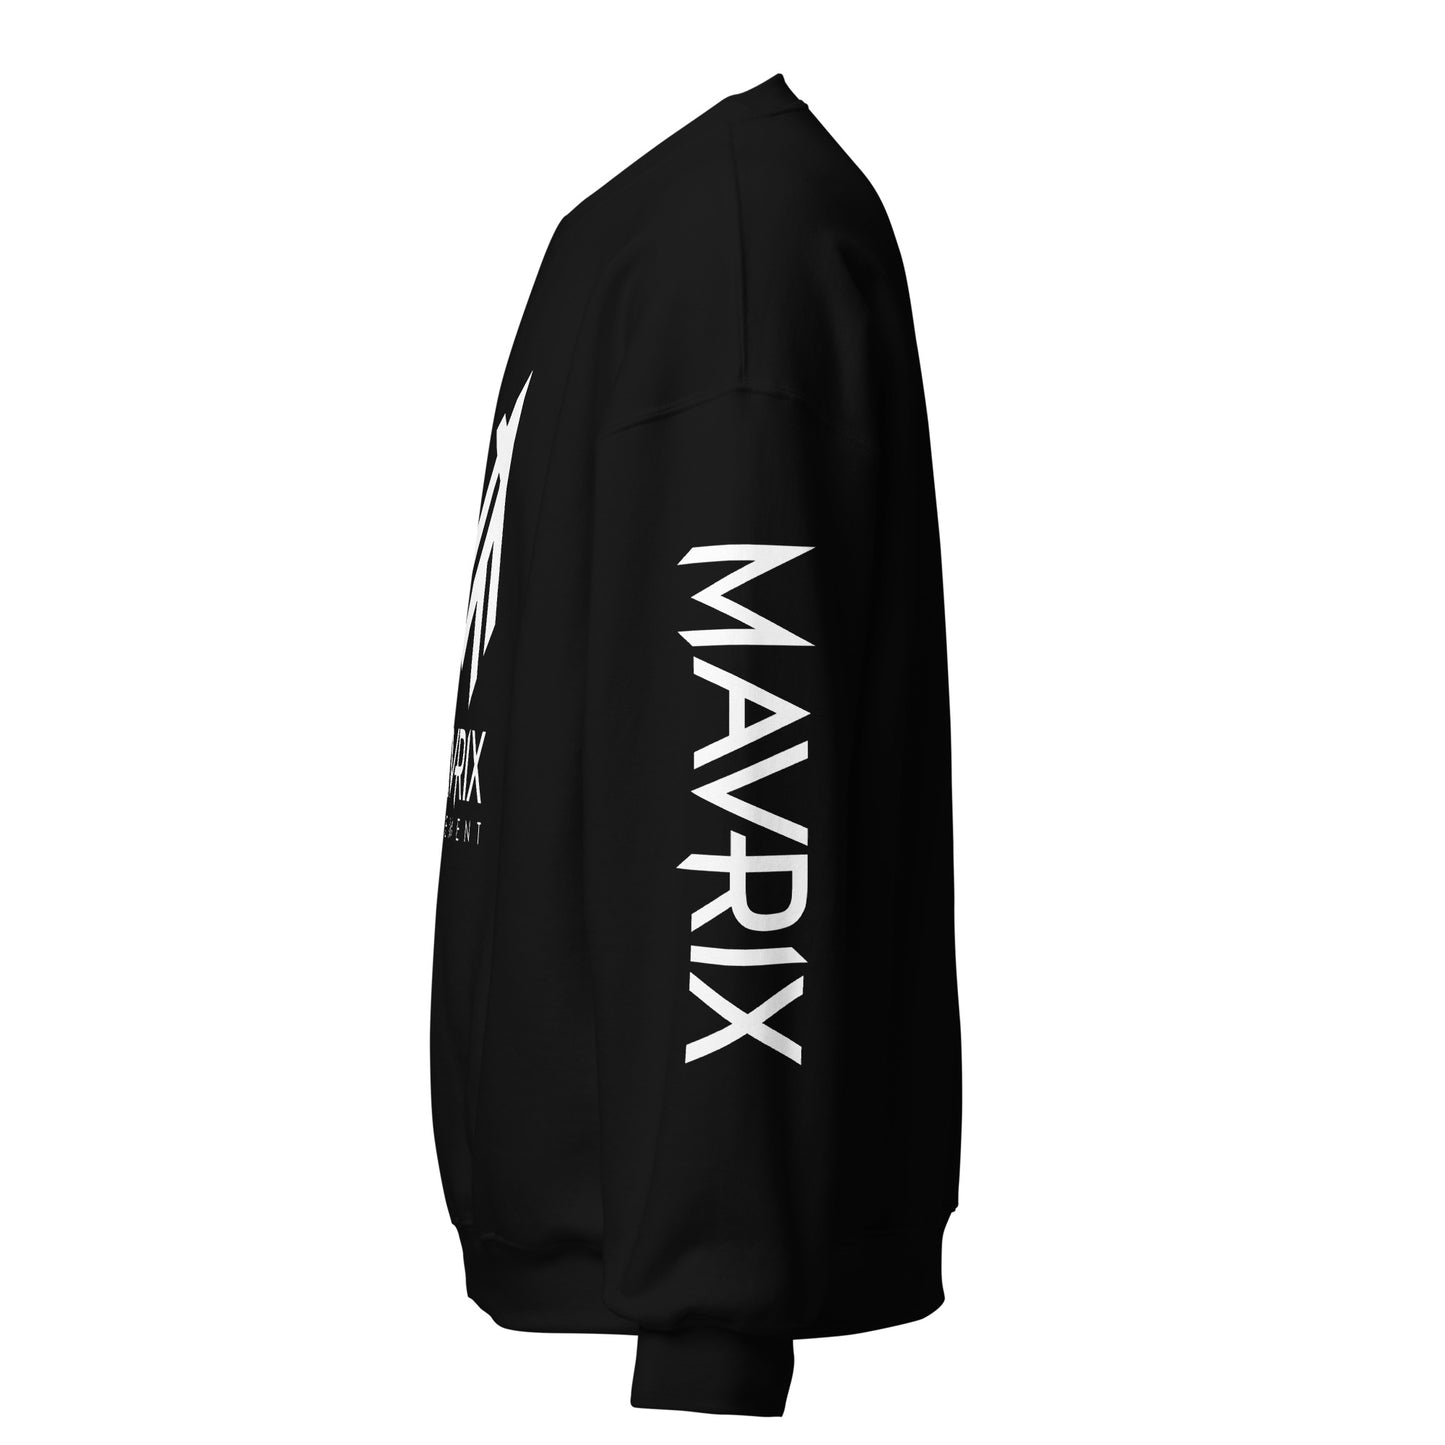 Mavrix Signature Sweatshirt (7 colors)